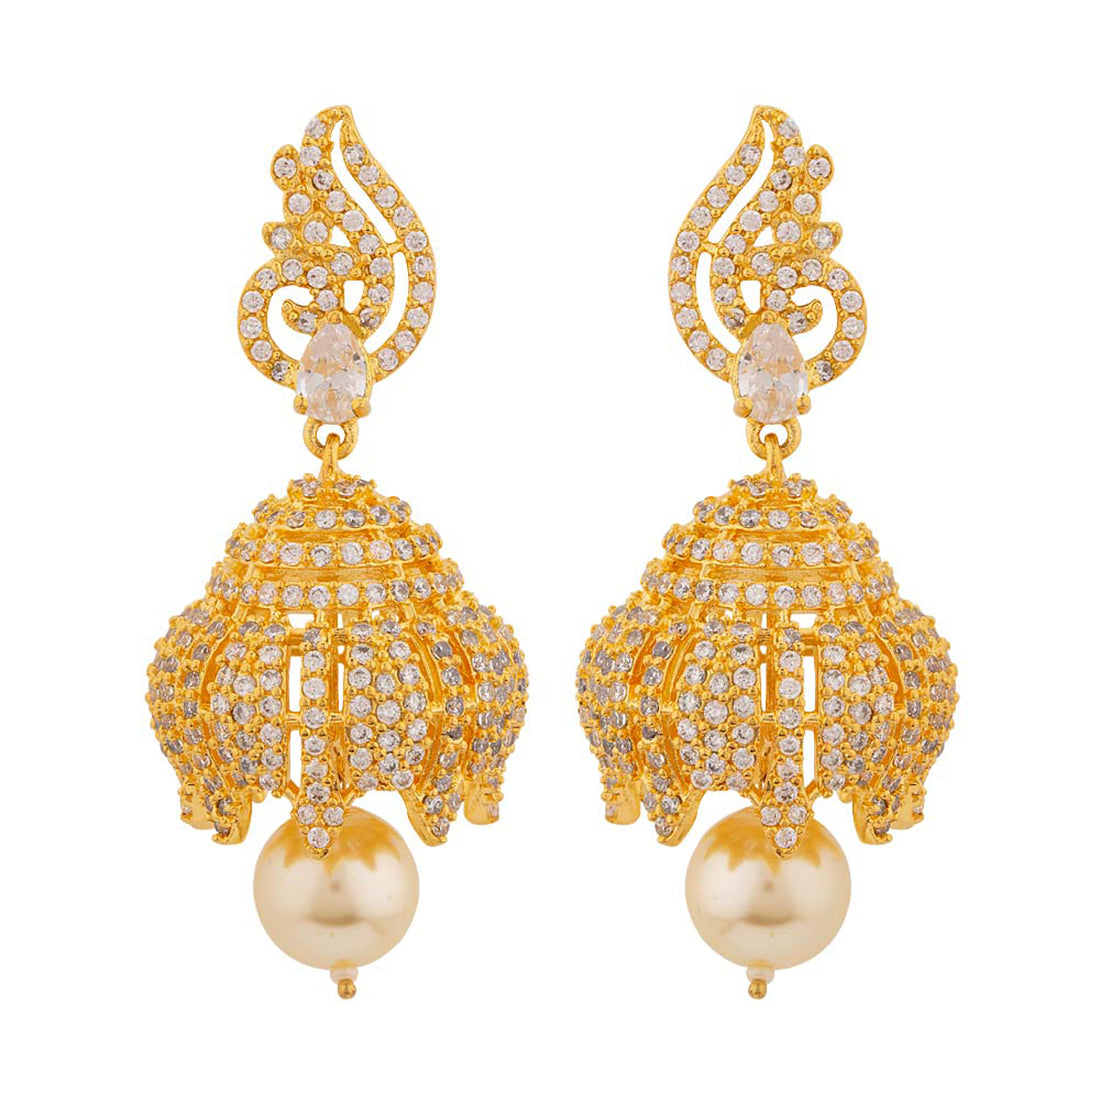 Wedding Earring Design for Bride | Pearl Earring Traditional Gold Earrings  | Temple jewellery earrings, Gold earrings designs, Jewelry design earrings